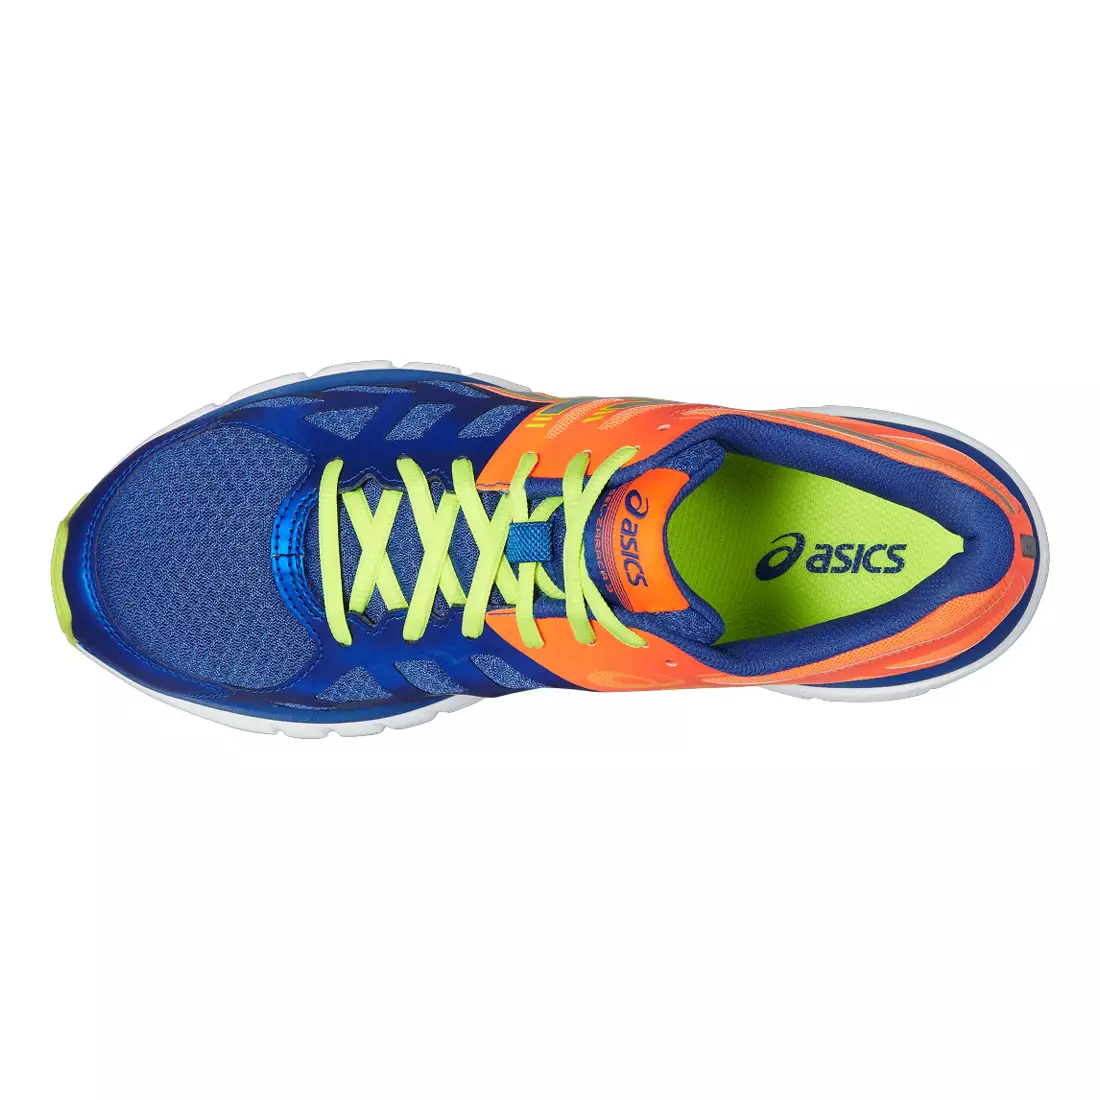 ASICS GEL-ZARACA 3 running shoes 4293